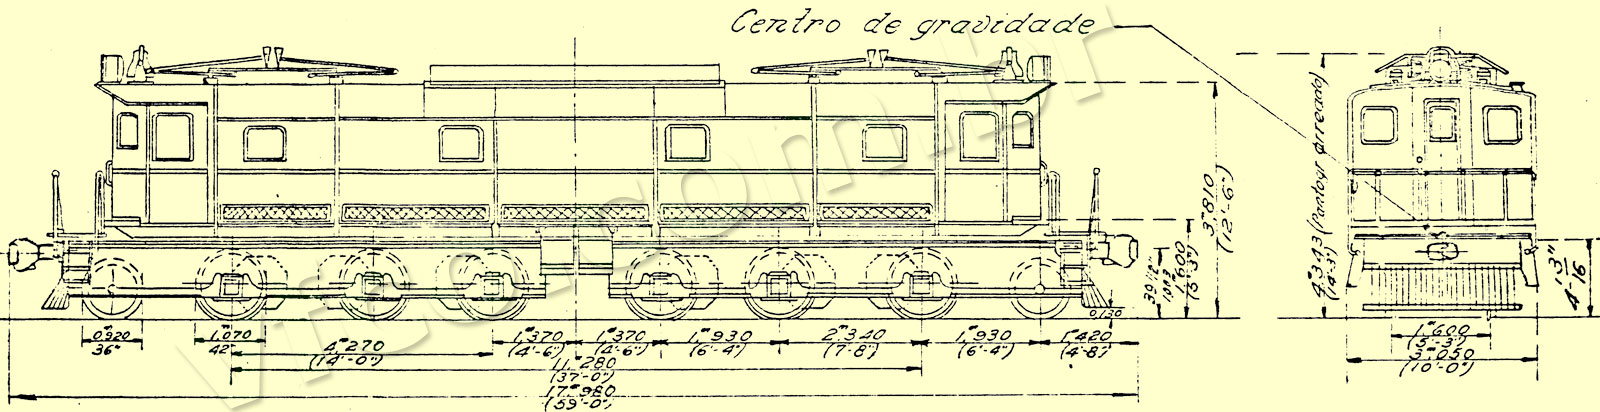 Desenho e medidas docomotiva elétrica 1-C+C-1 Metropolitan-Vickers nº 330 da CPEF - Francisco de Monlevade